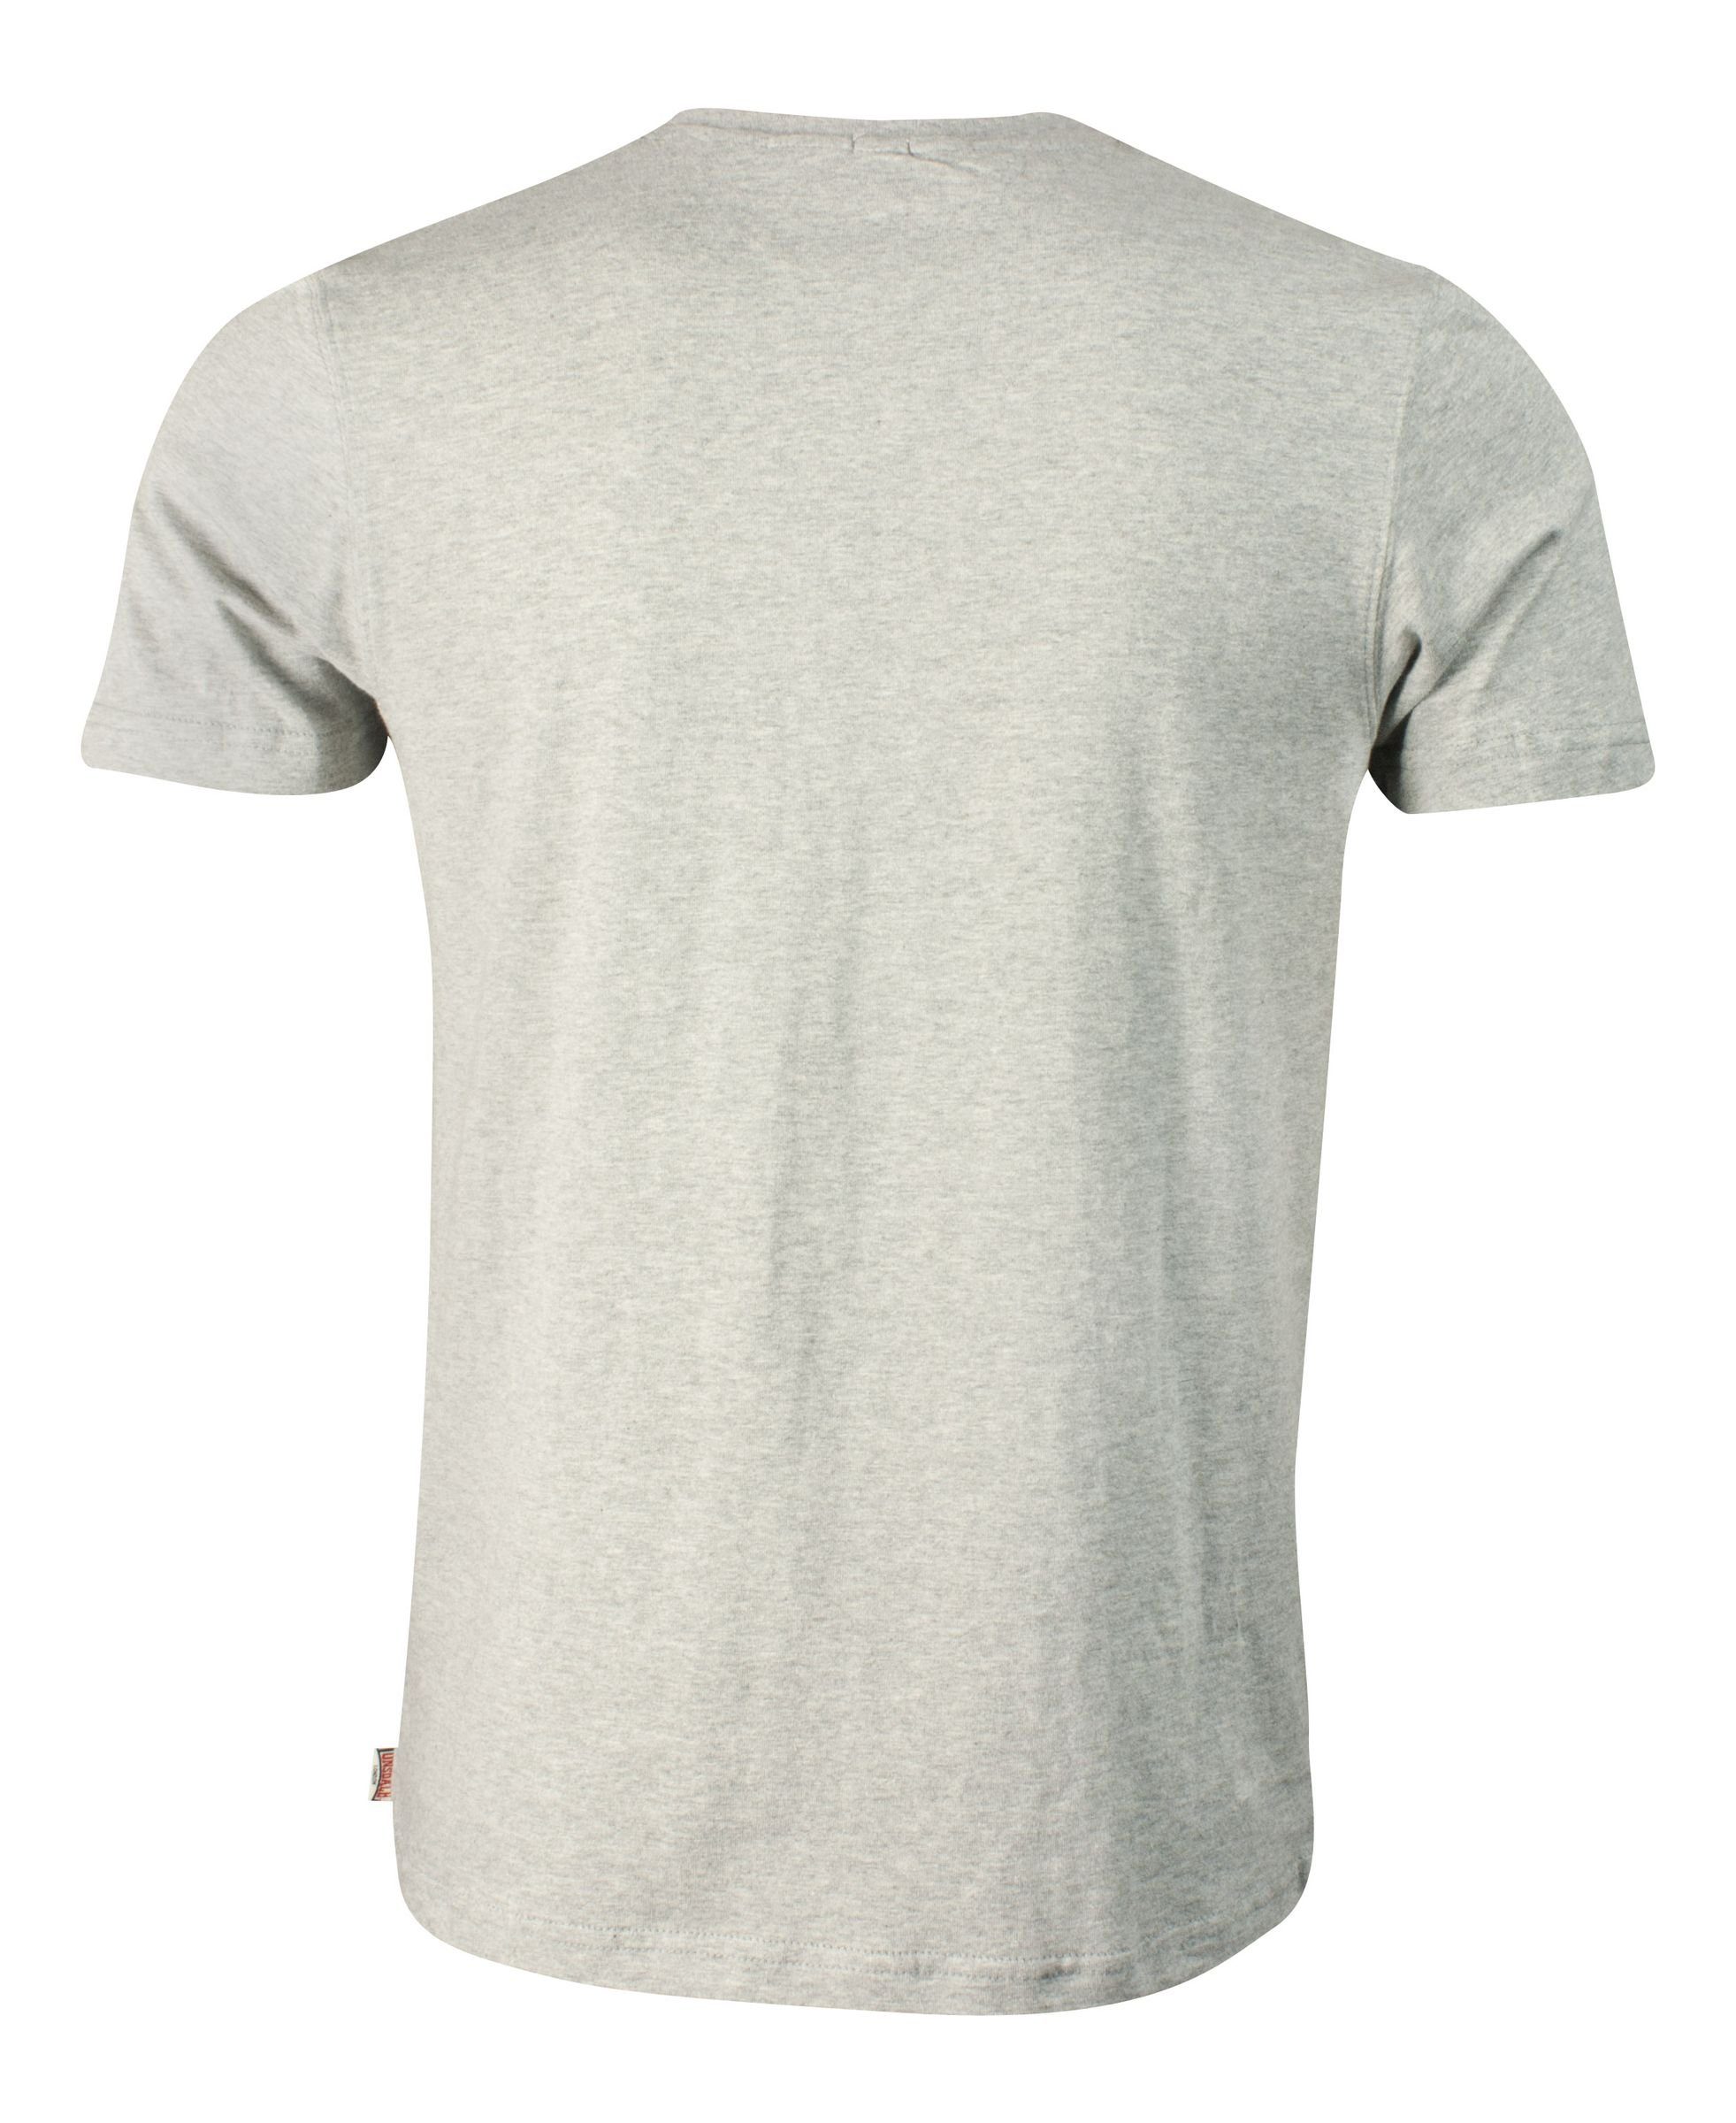 Lonsdale T-Shirt Classic T-Shirt Lonsdale Herren Adult grey marl